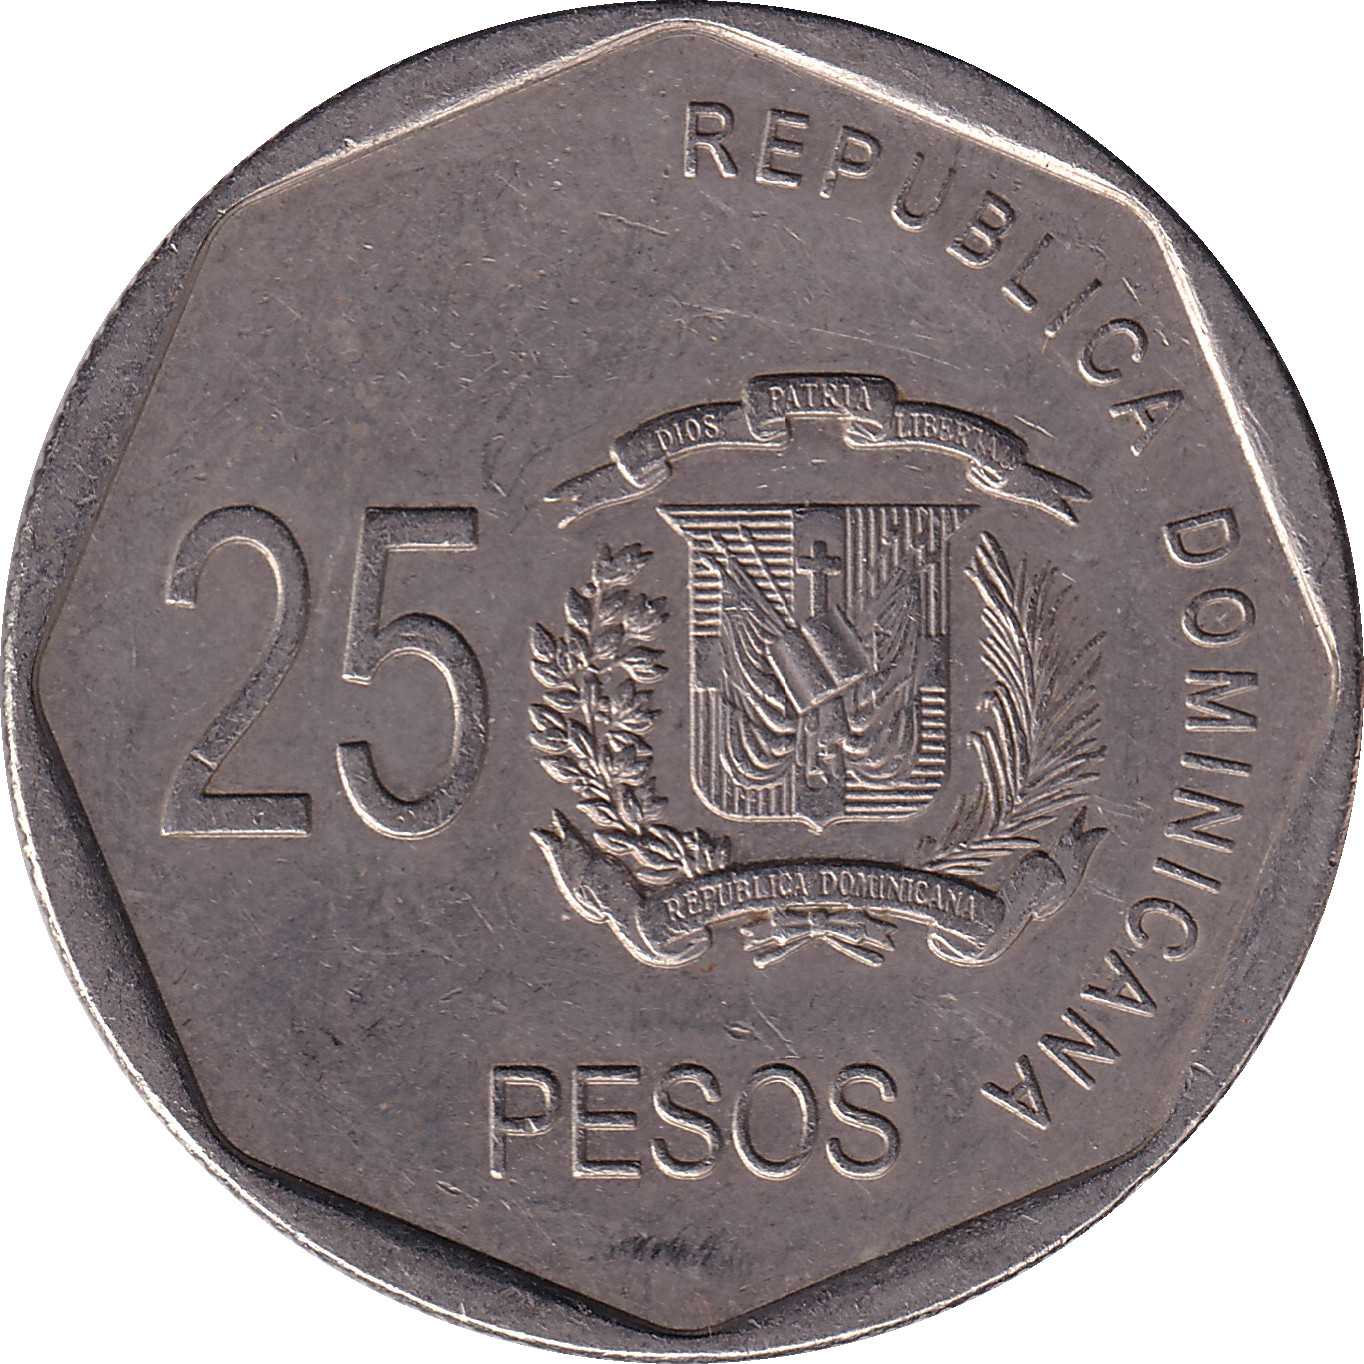 25 pesos - General Luperon